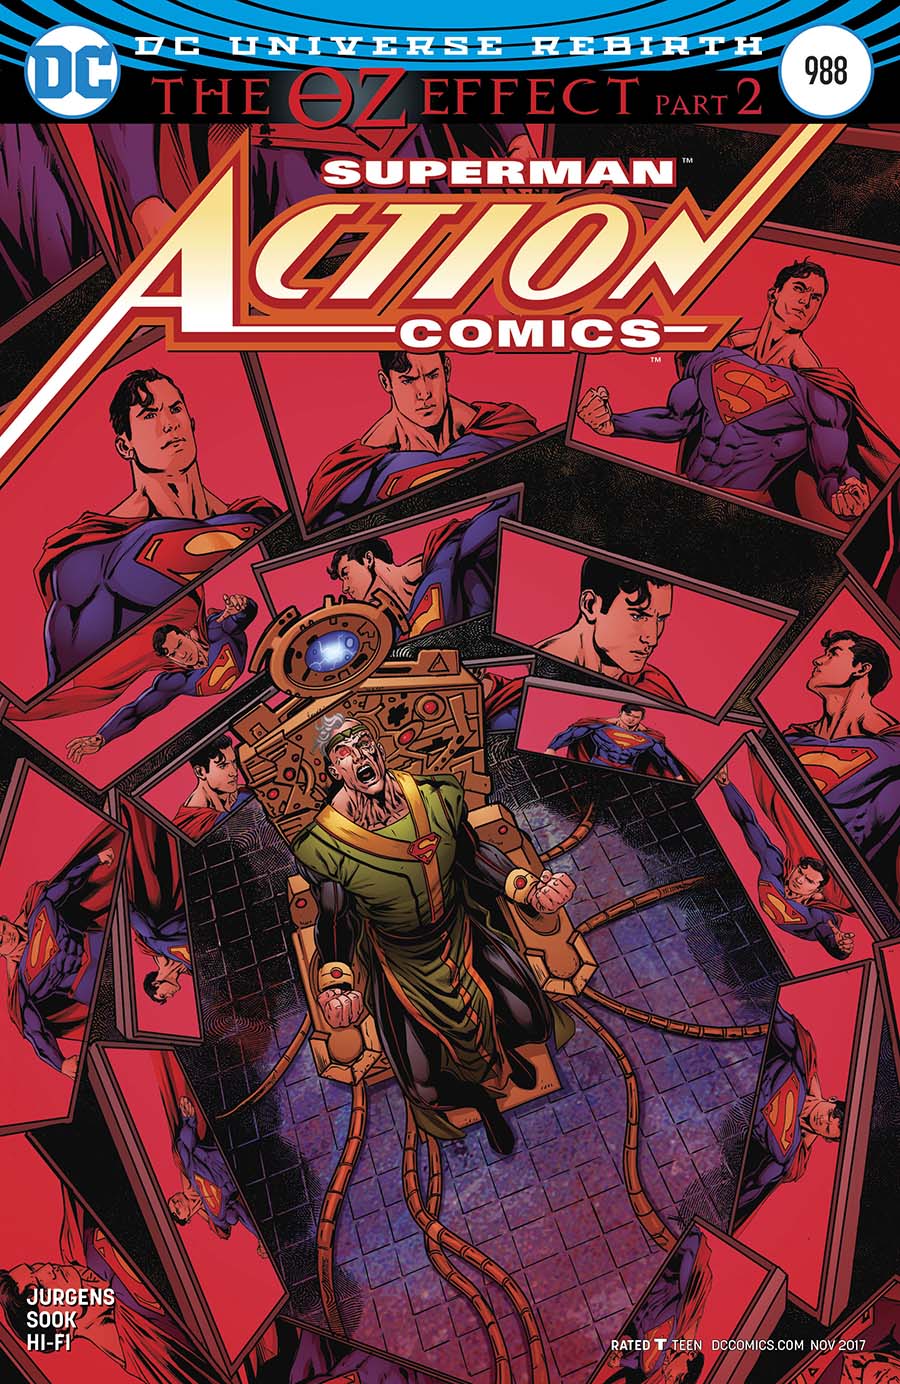 Action Comics #988